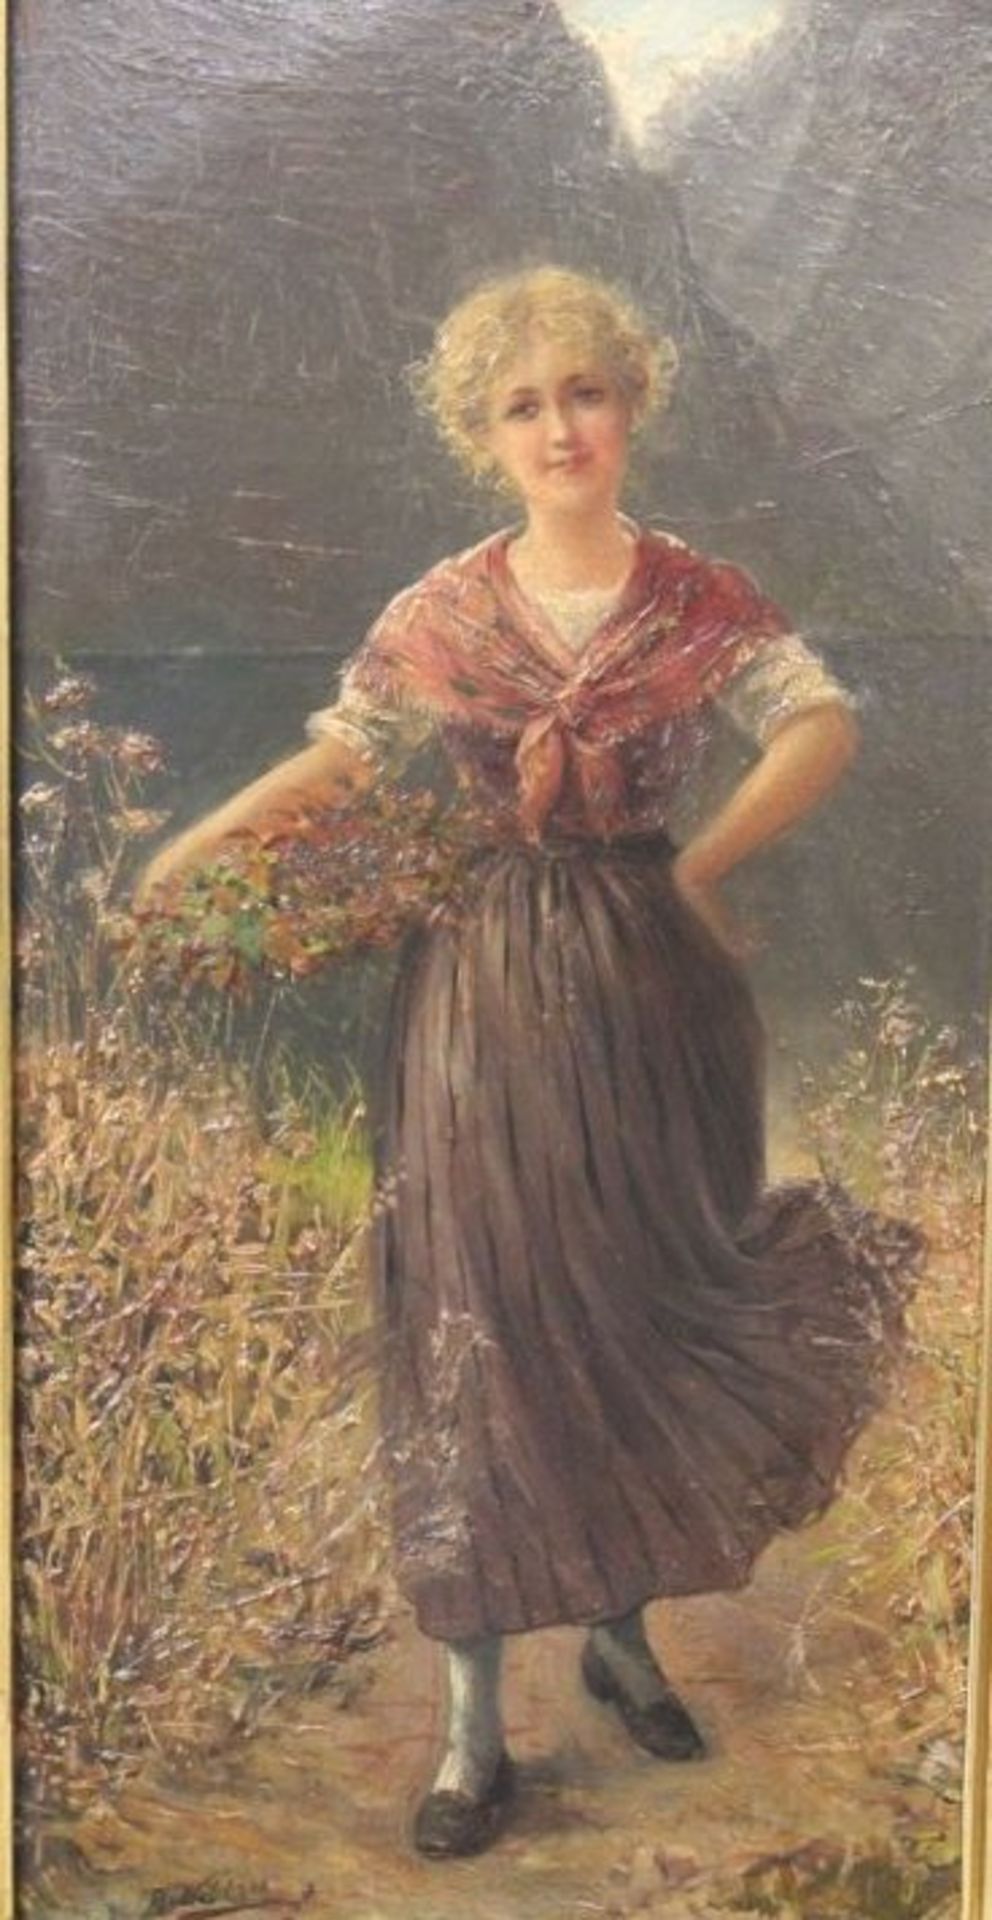 Wildau, A. (Ende 19. Jh.) "Junge Frau mit Blumenkorb", Öl/Holz, gut gerahmt, RG 65 x 44cm.